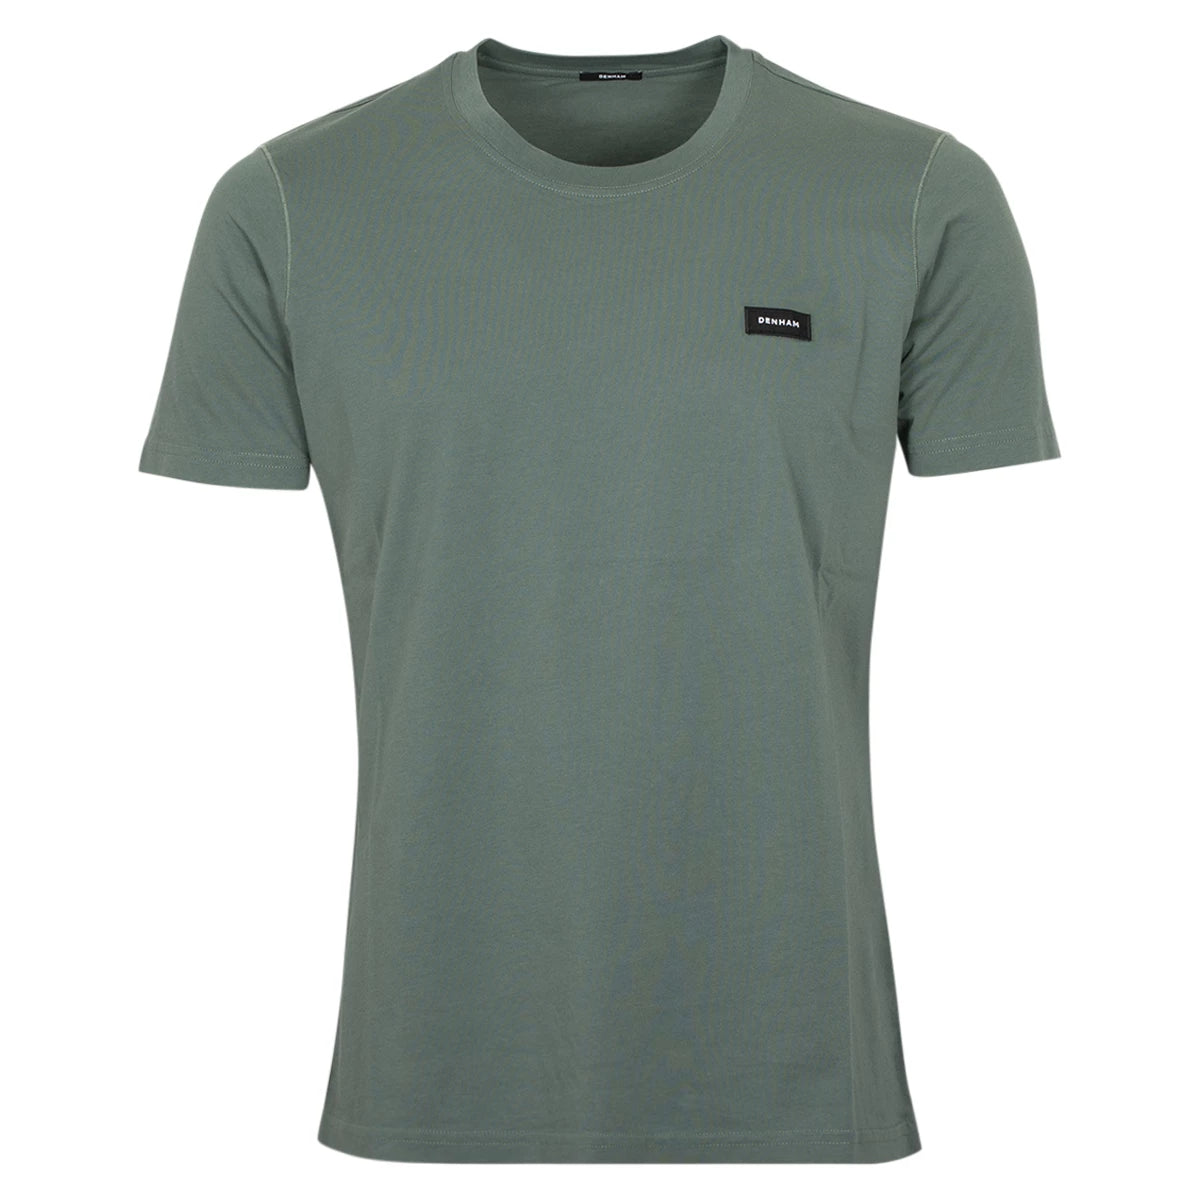 Denham t-shirt groen | Slim tee